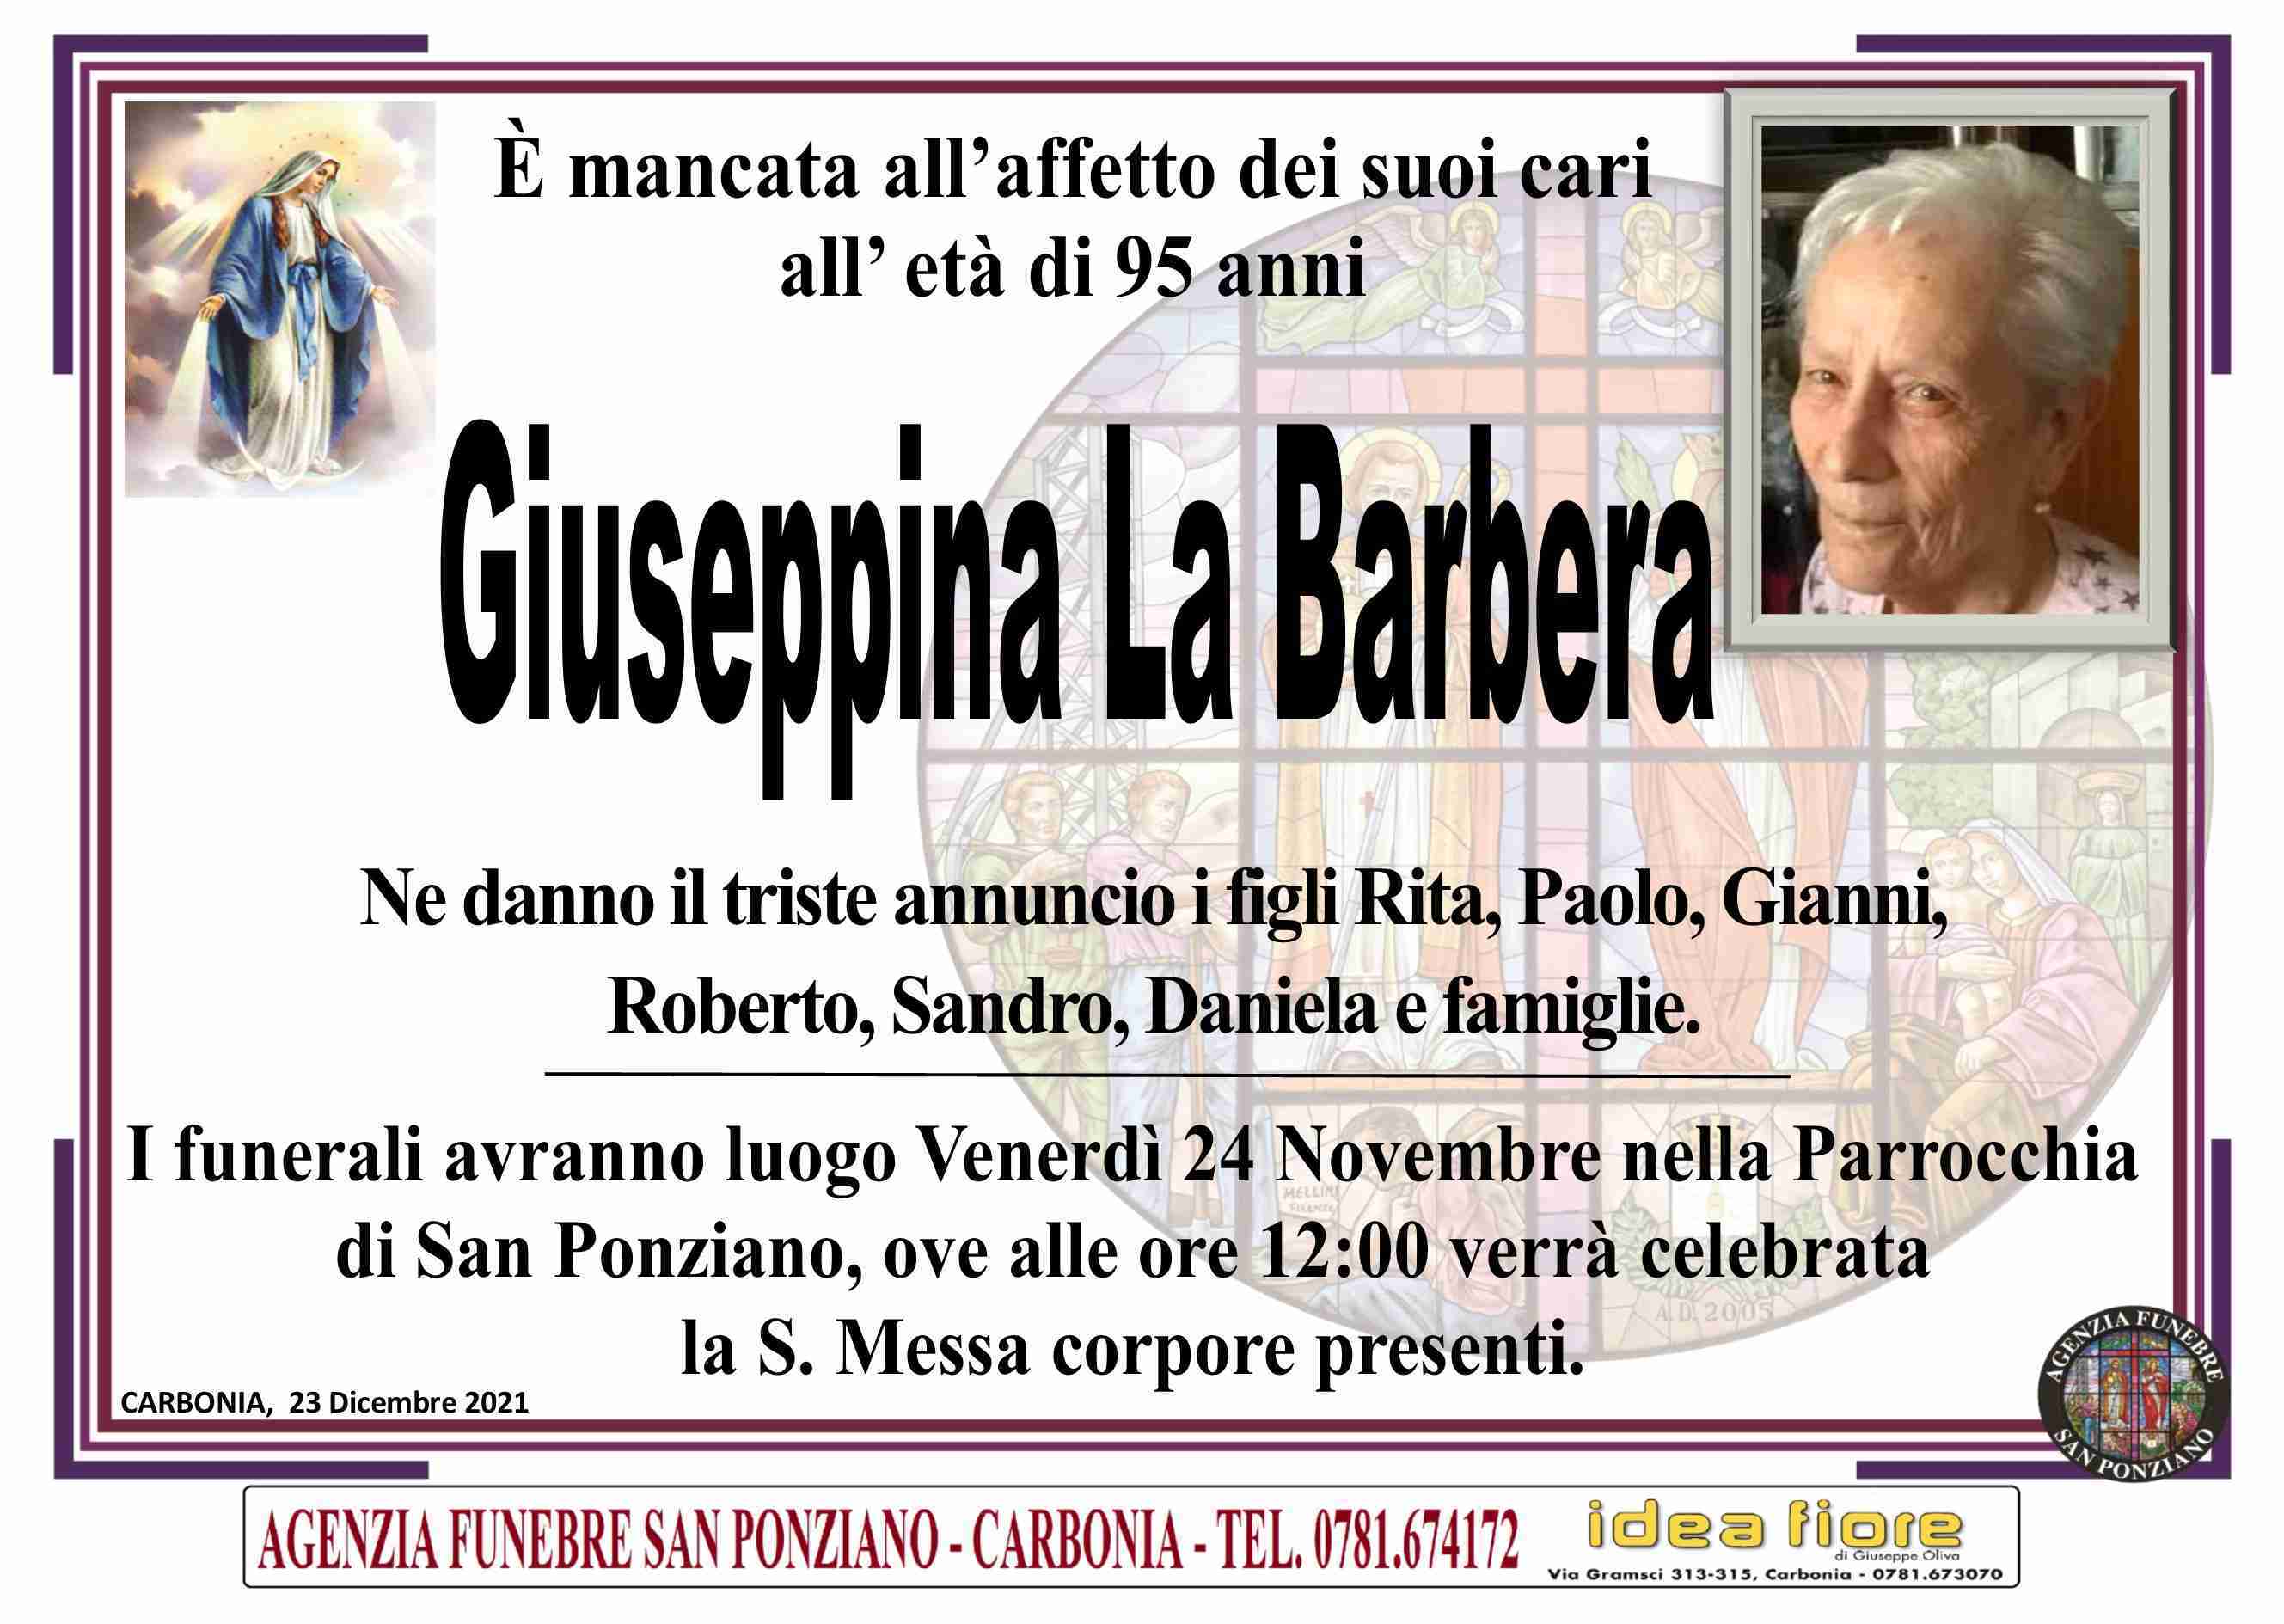 Giuseppina La Barbera